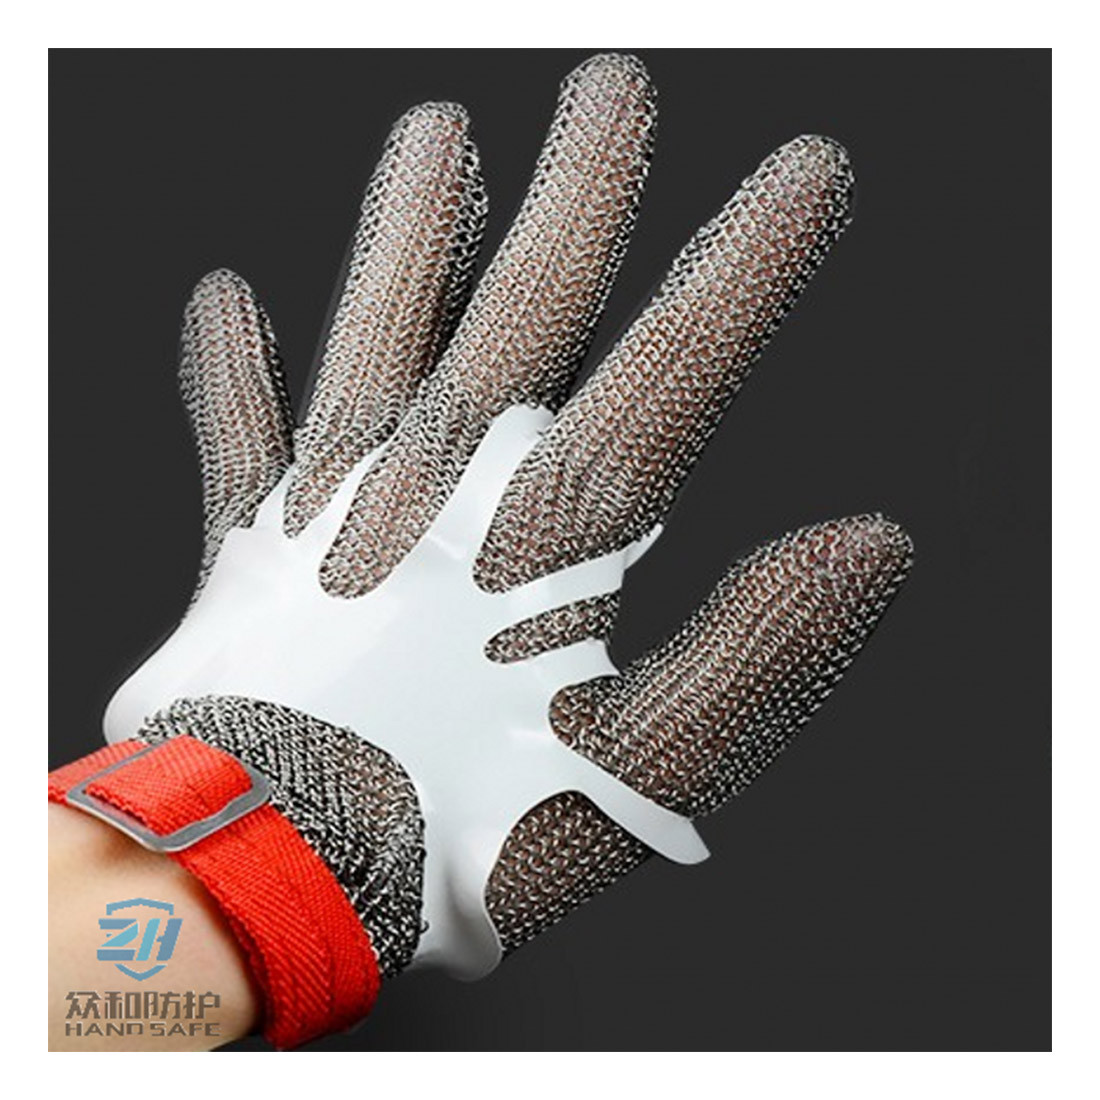 Handschuhspanner - Arbeitschutz